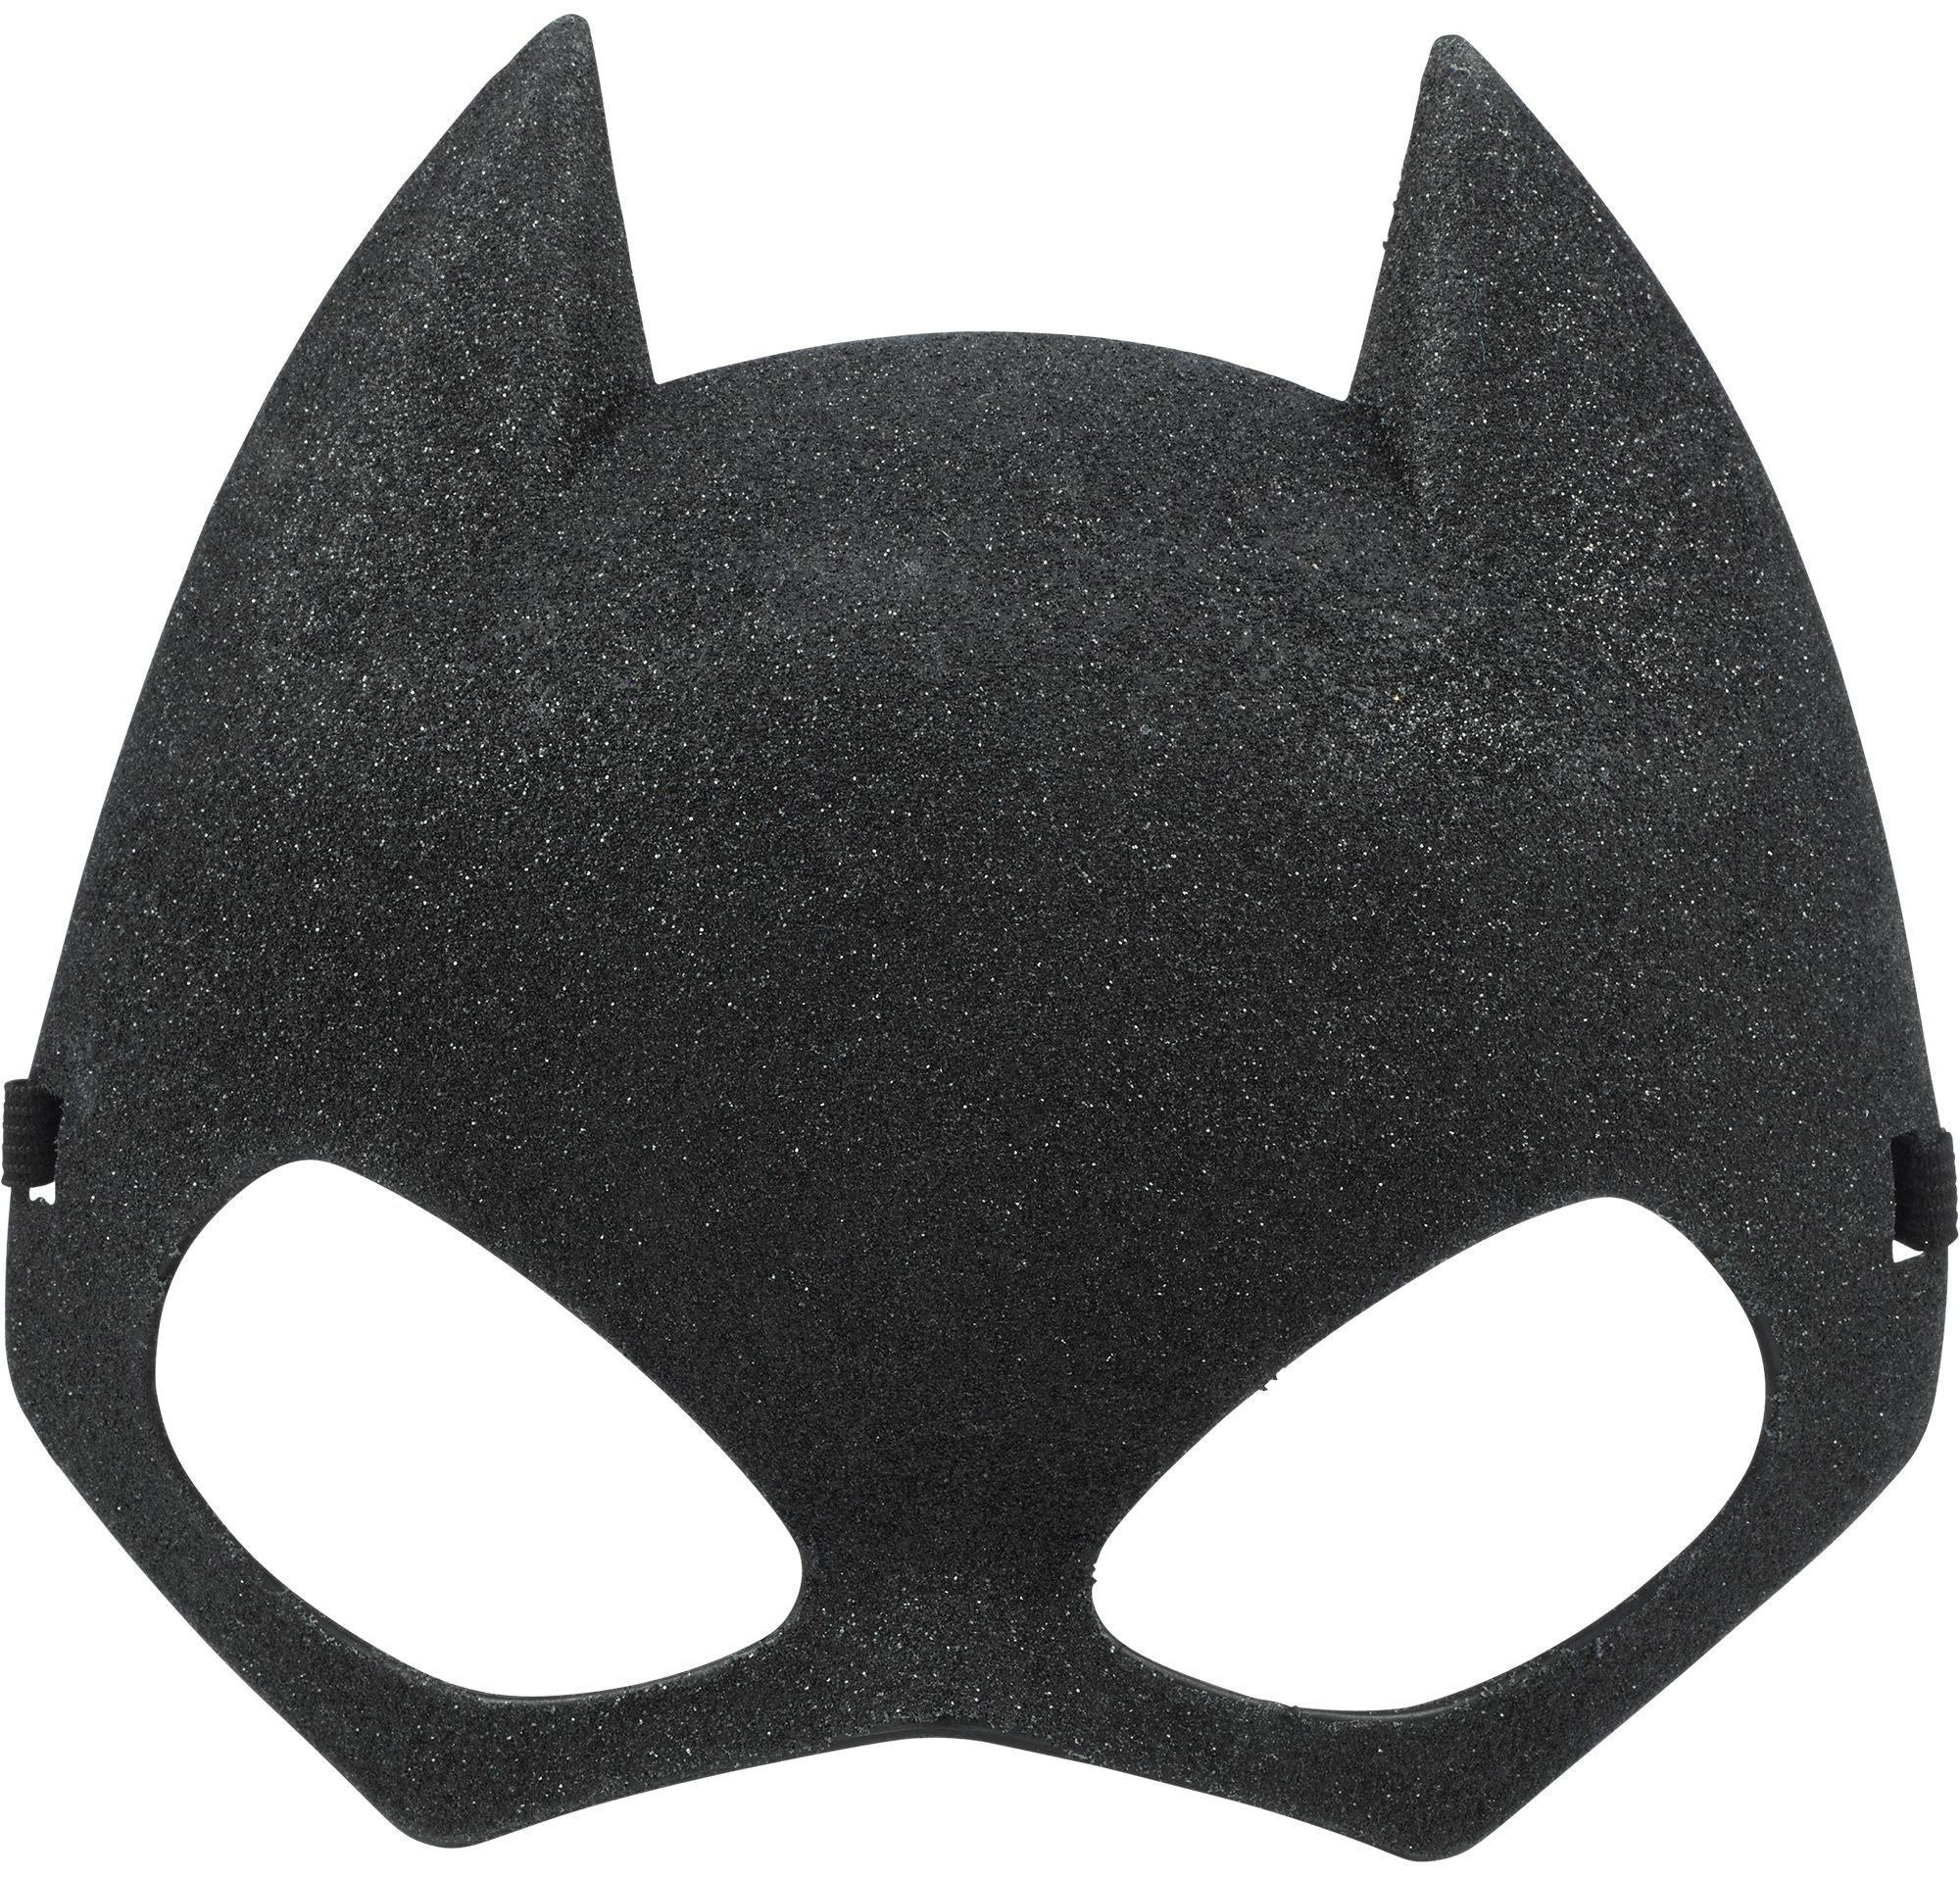 Child Glitter Batgirl Mask - Batman | Party City